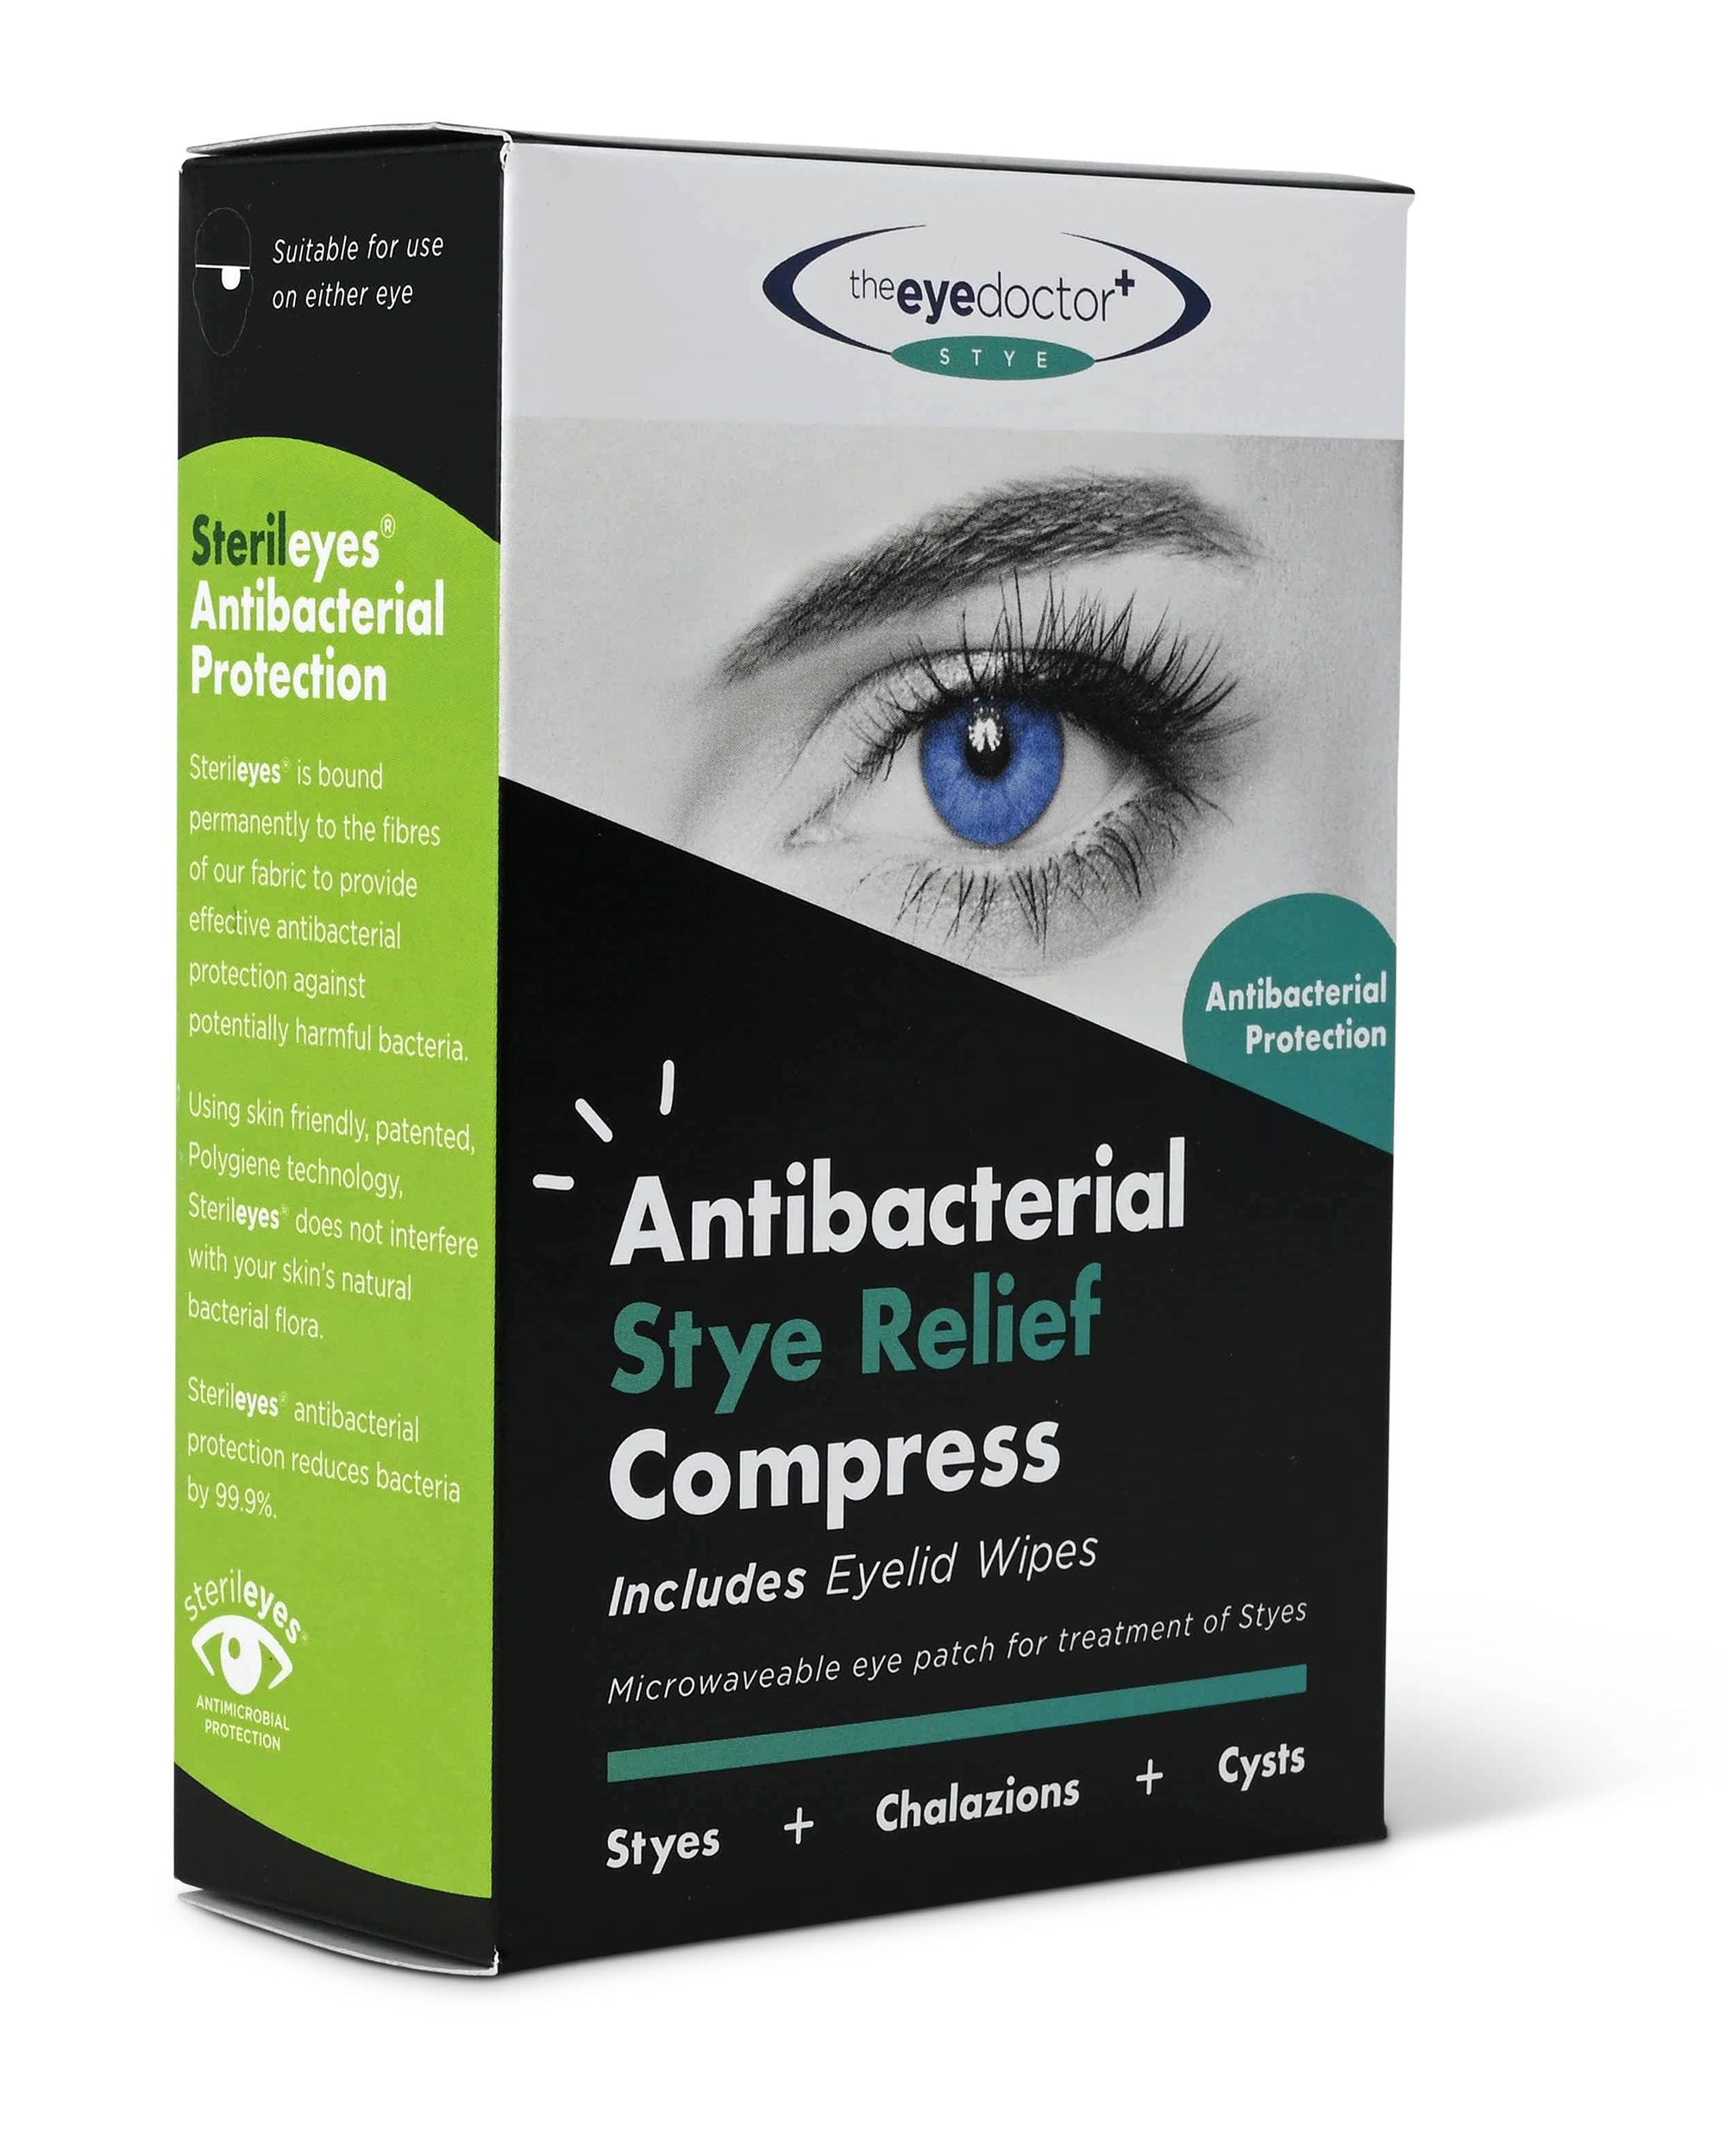 The Eye Doctor Antibacterial Stye Relief Compress